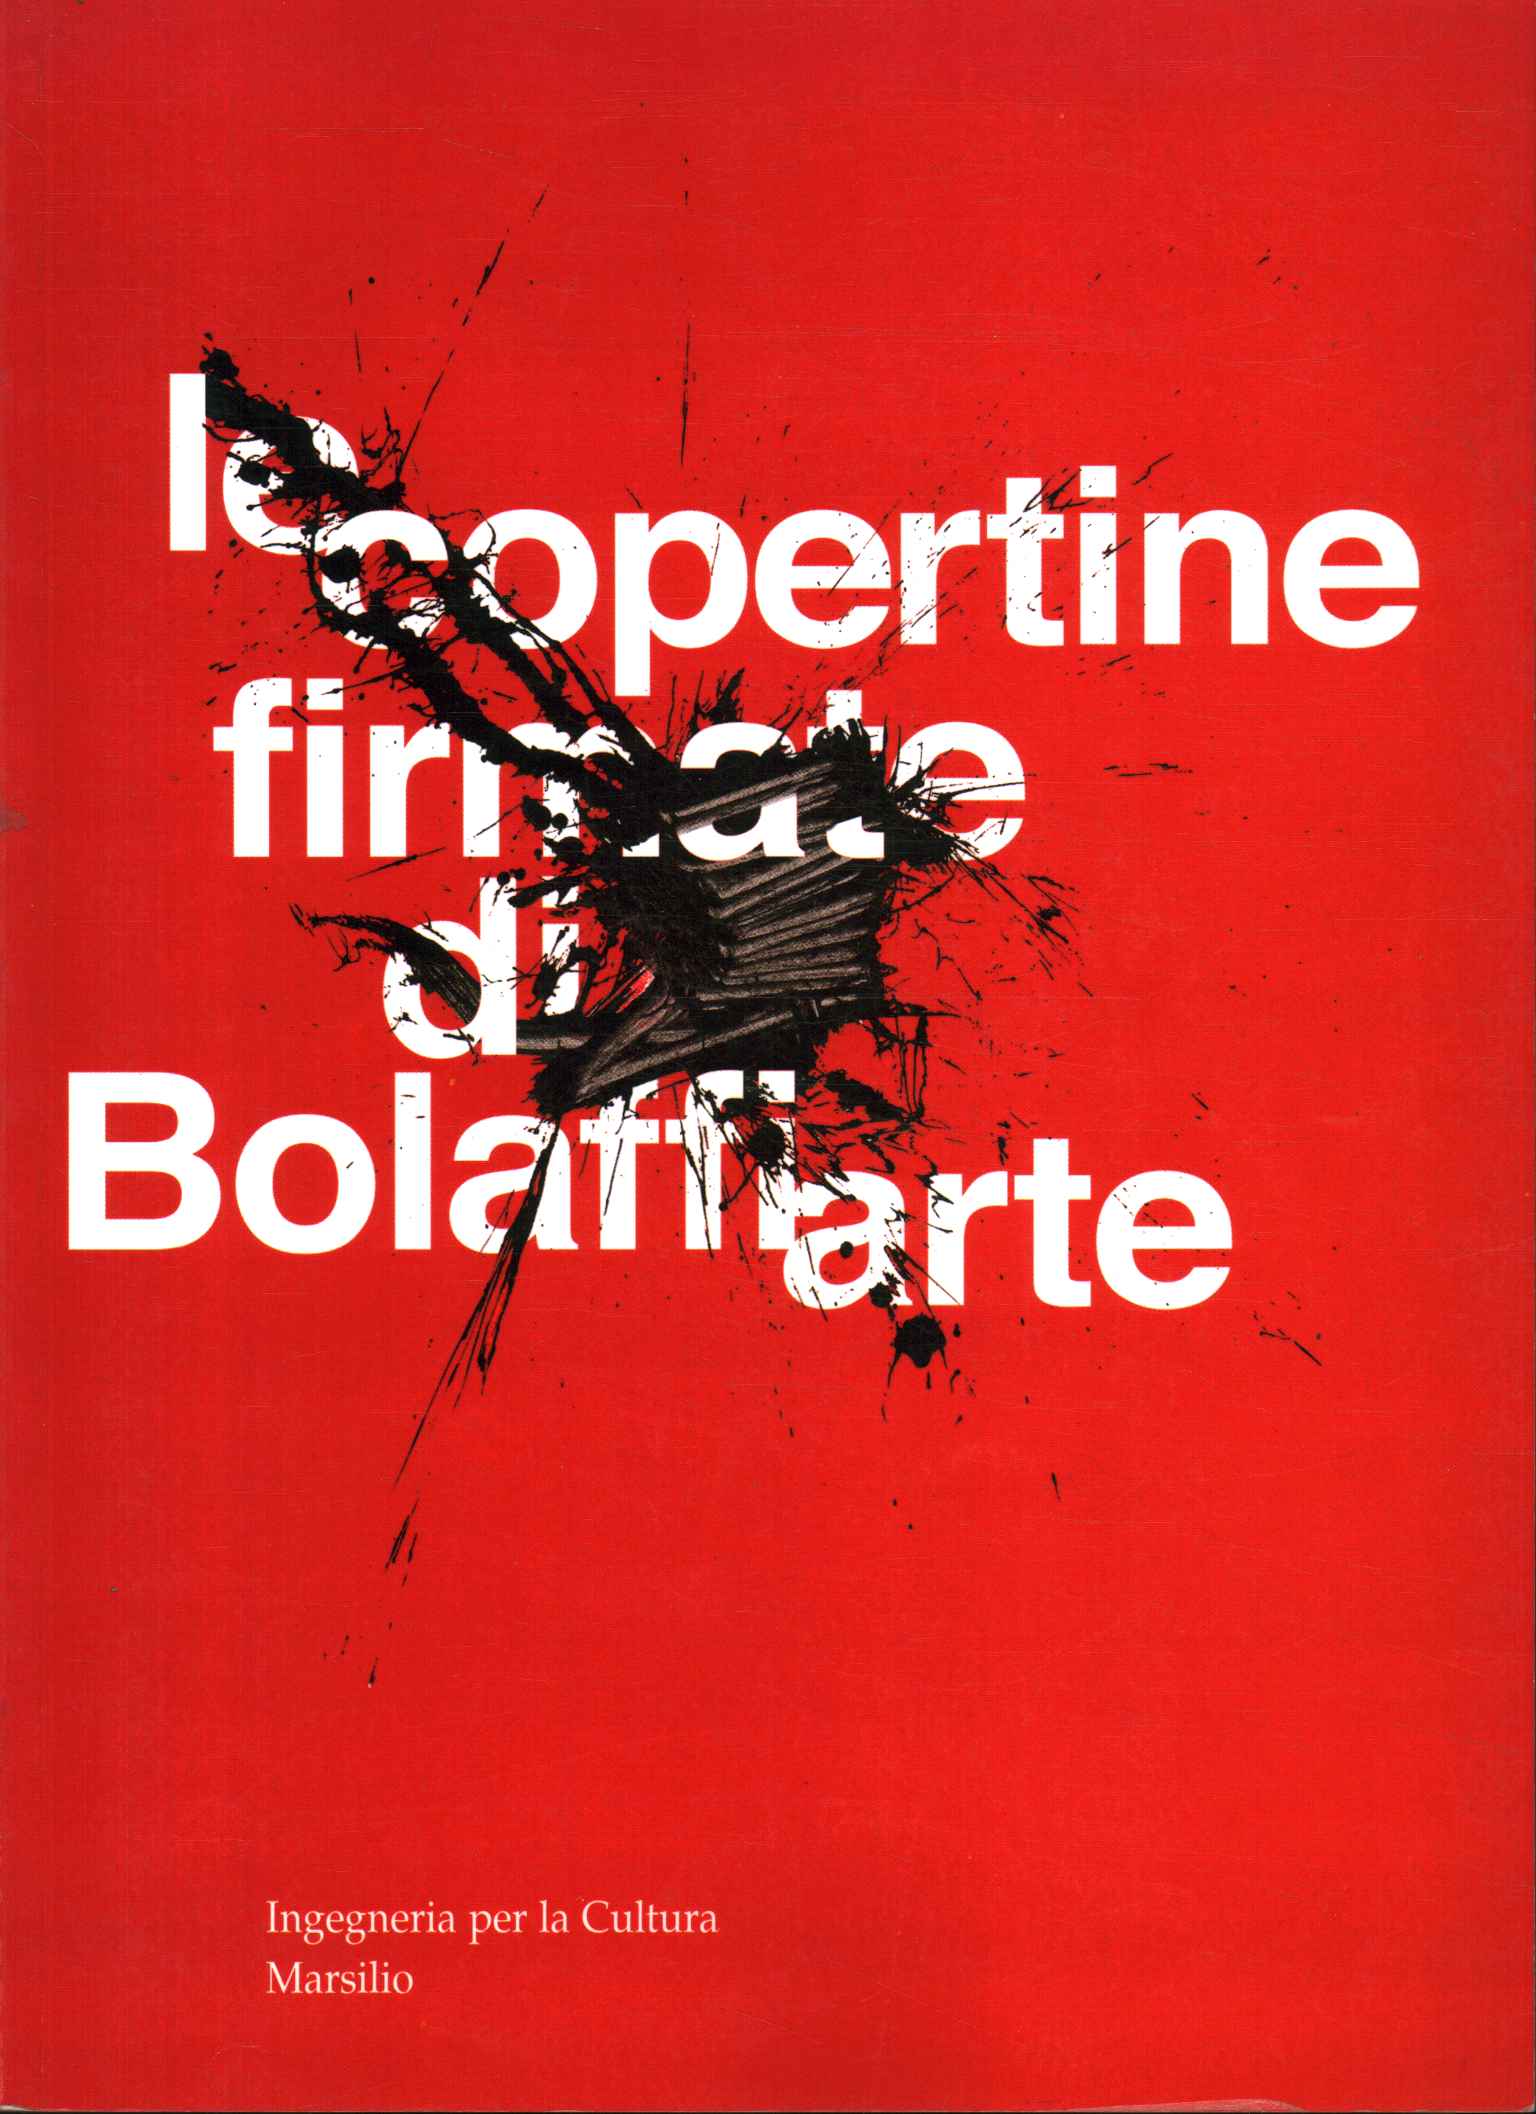 Bolaffiarte's signed covers